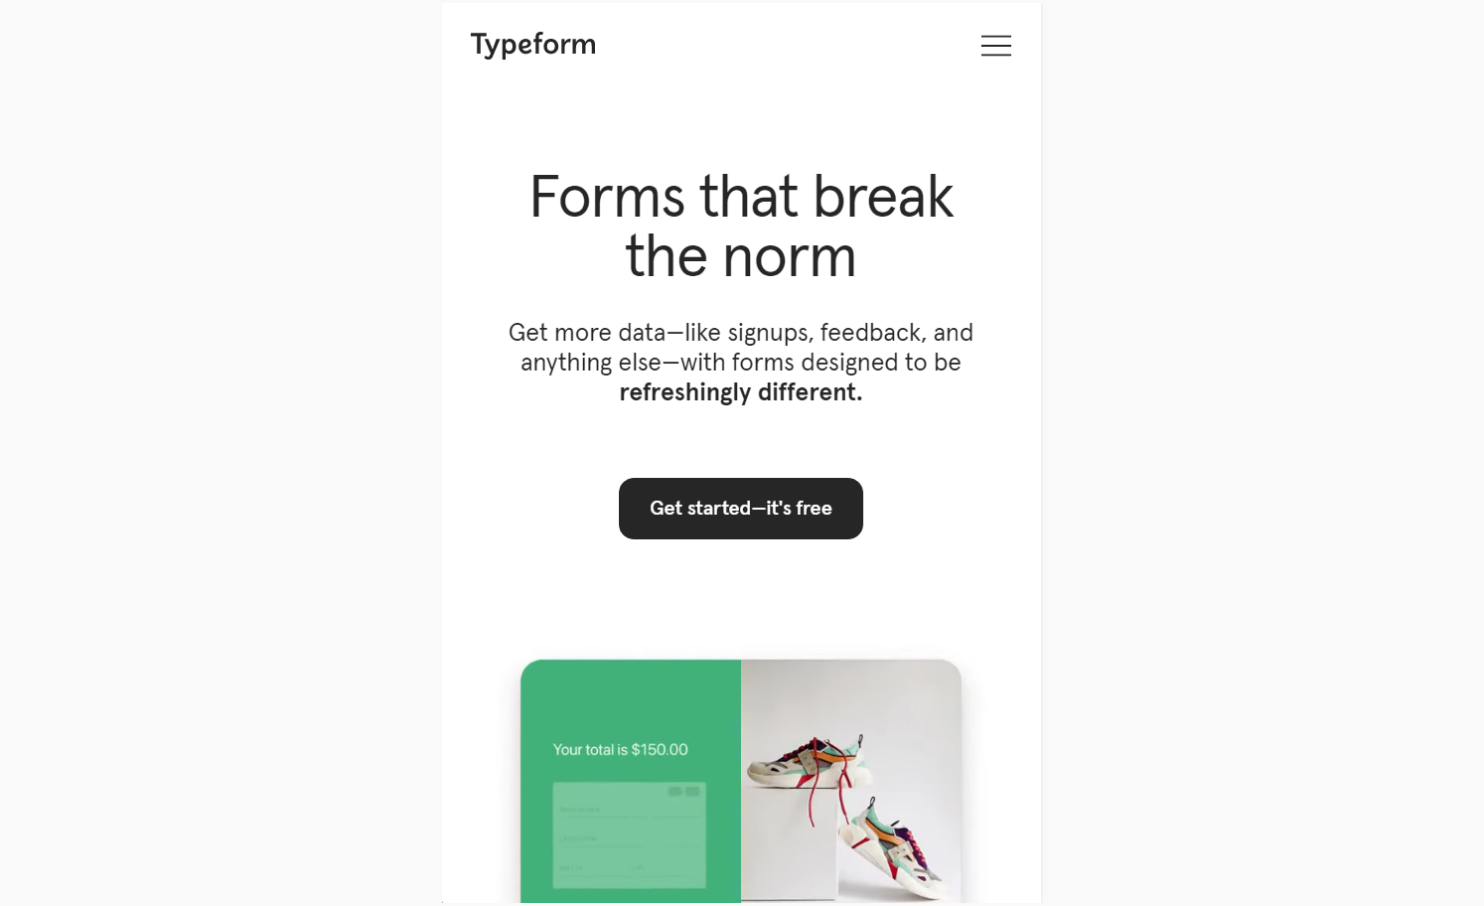 Mobile first design on Typeform